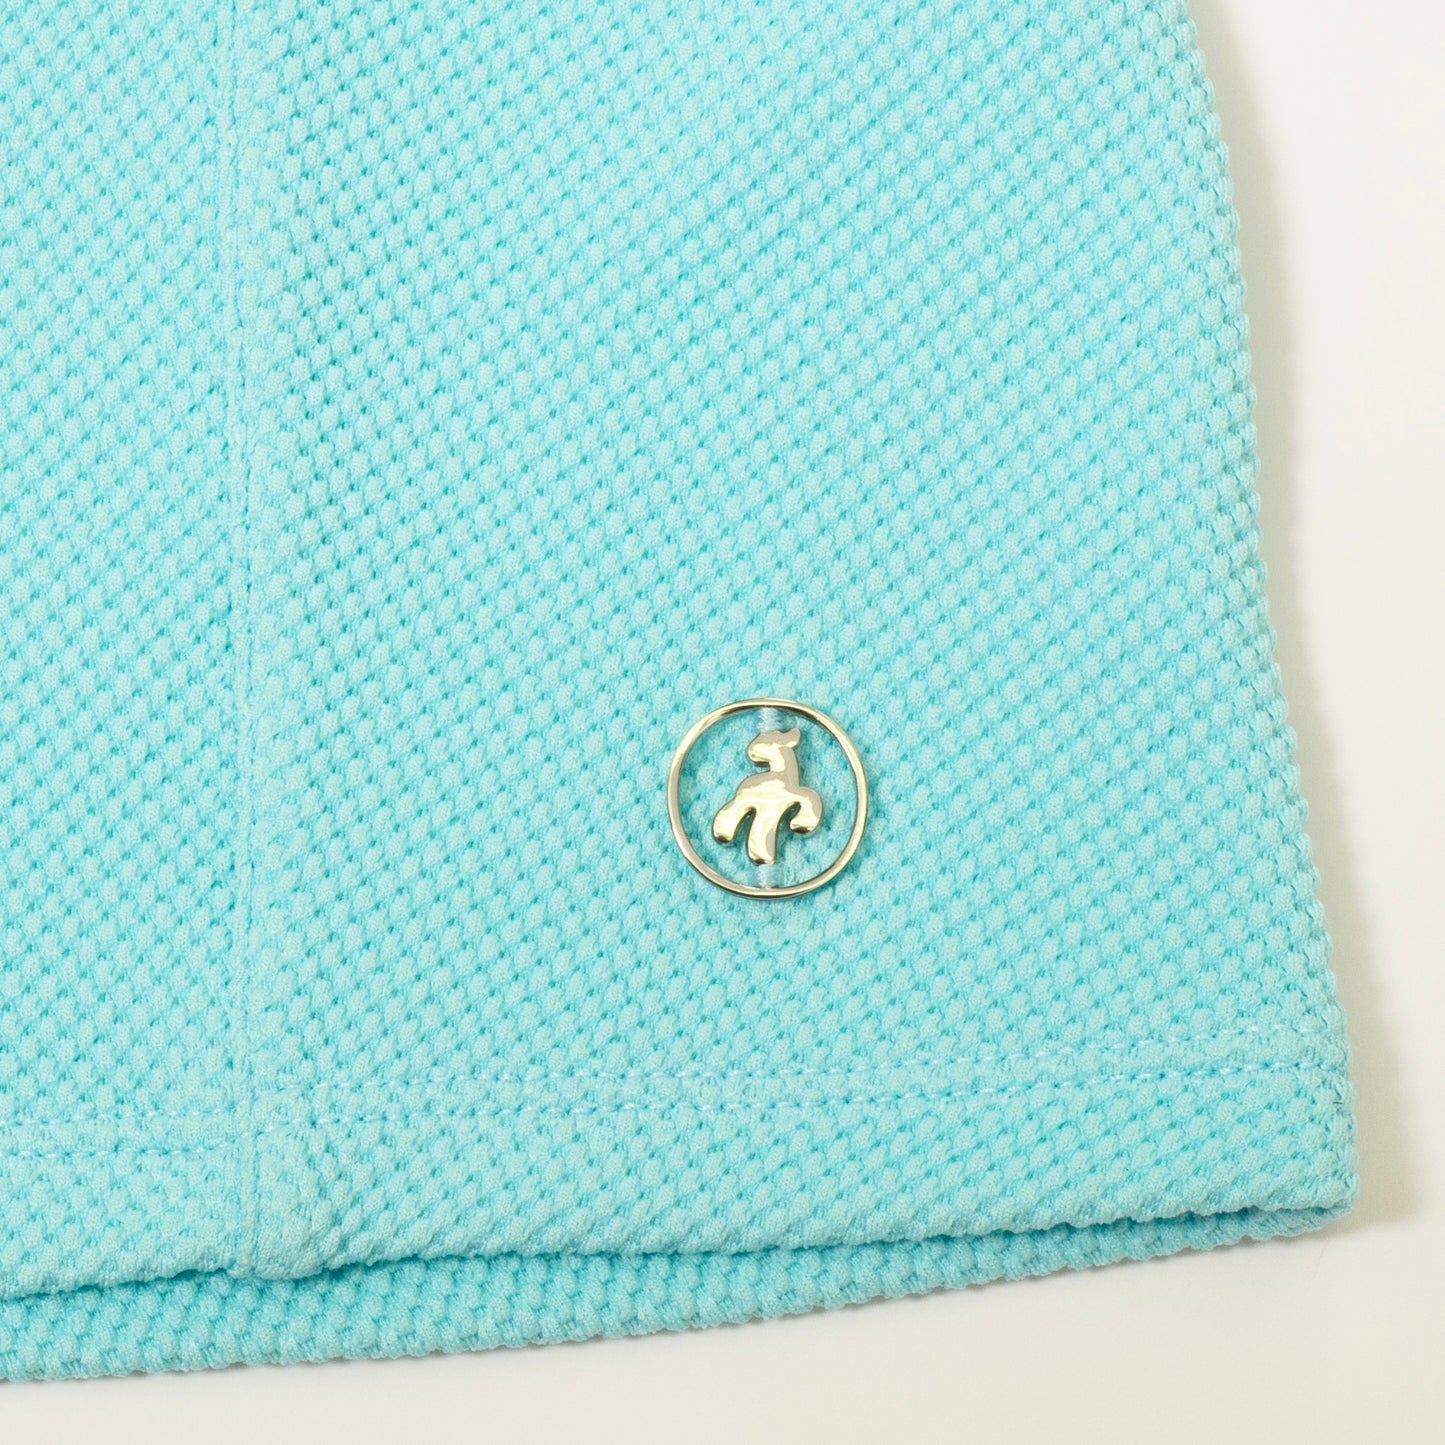 Green Lamb Women's Zip-Neck Golf Top in Aqua Blue with Waffle Design